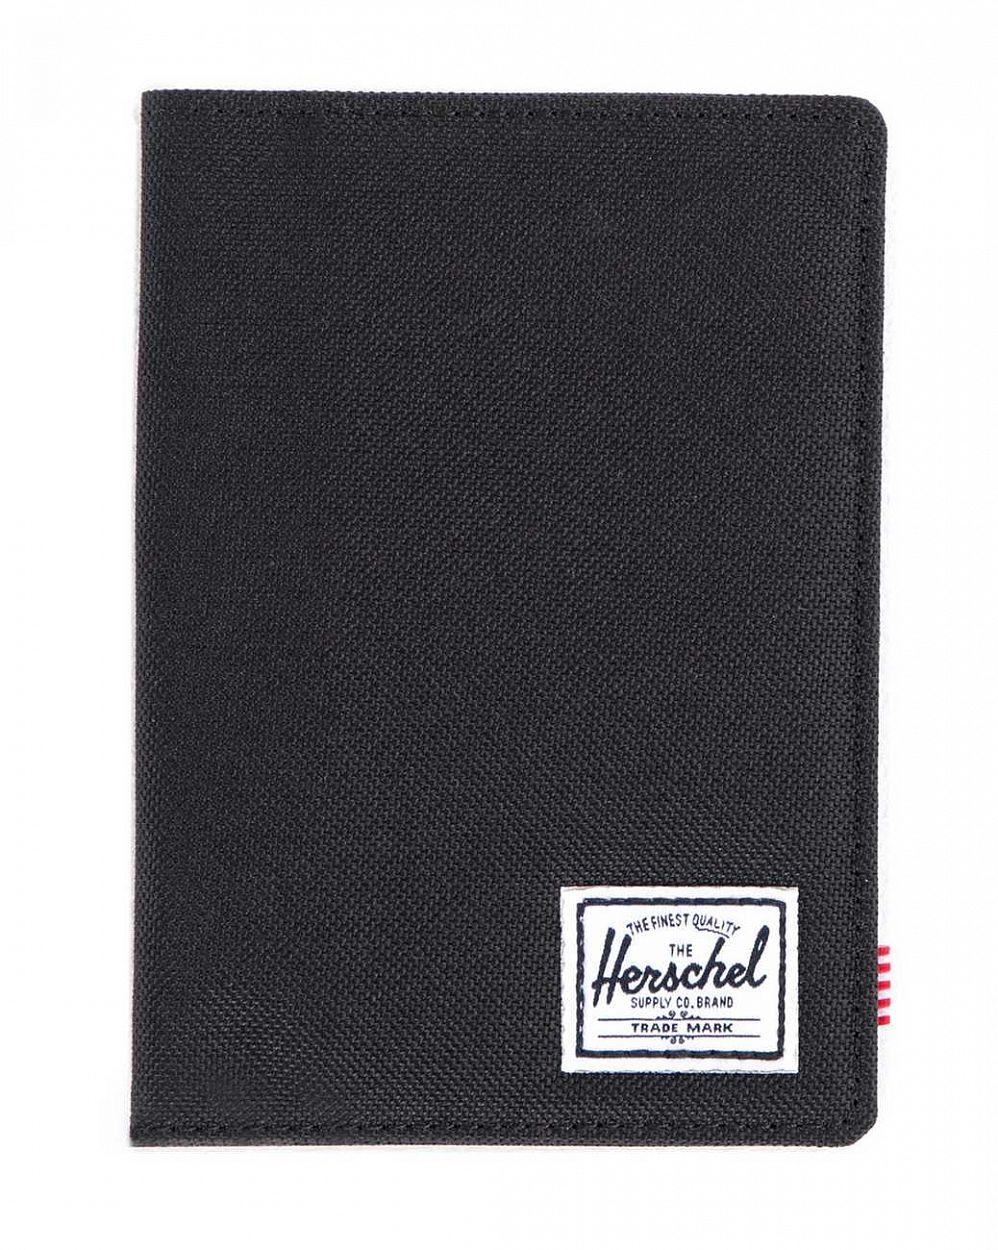 Обложка Herschel Raynor Passport Holder Black Black отзывы